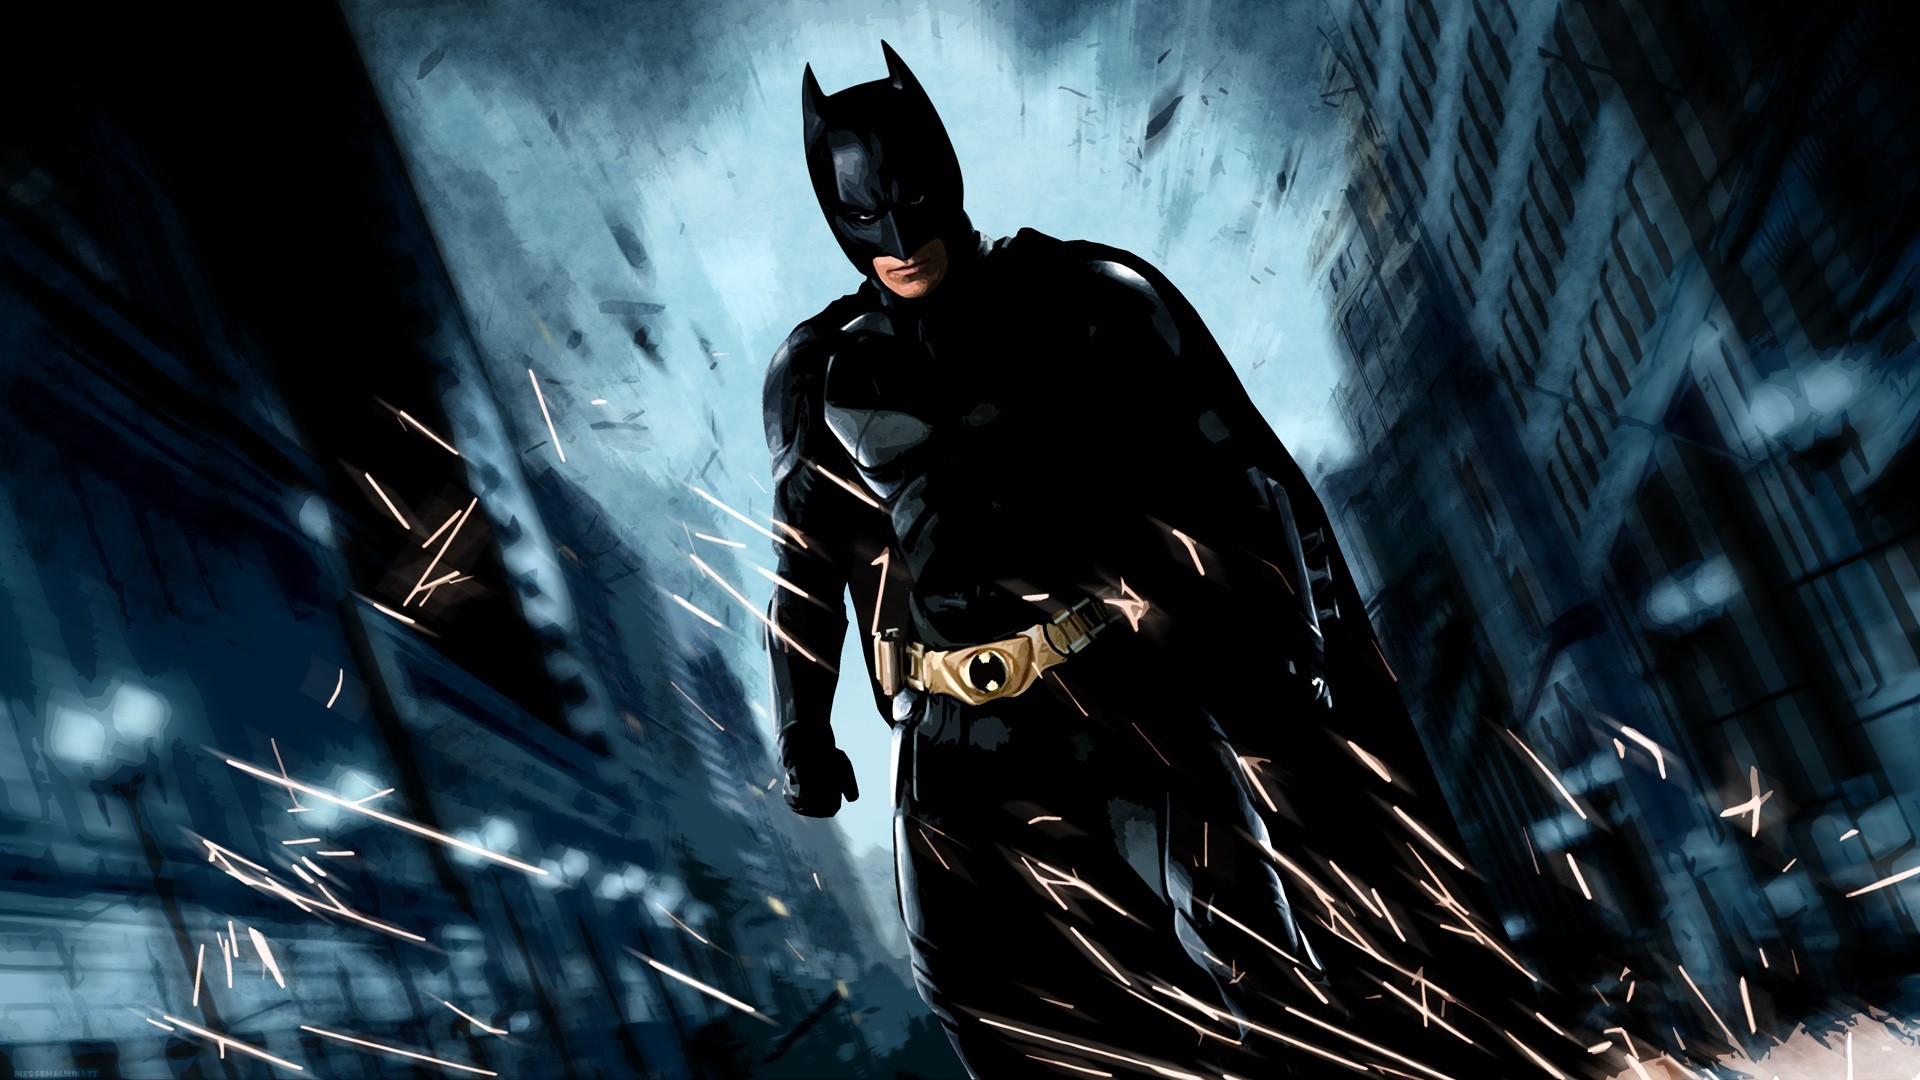 General 1920x1080 movies The Dark Knight Rises Batman MessenjahMatt The Dark Knight superhero DC Comics Christian Bale actor Warner Brothers Christopher Nolan